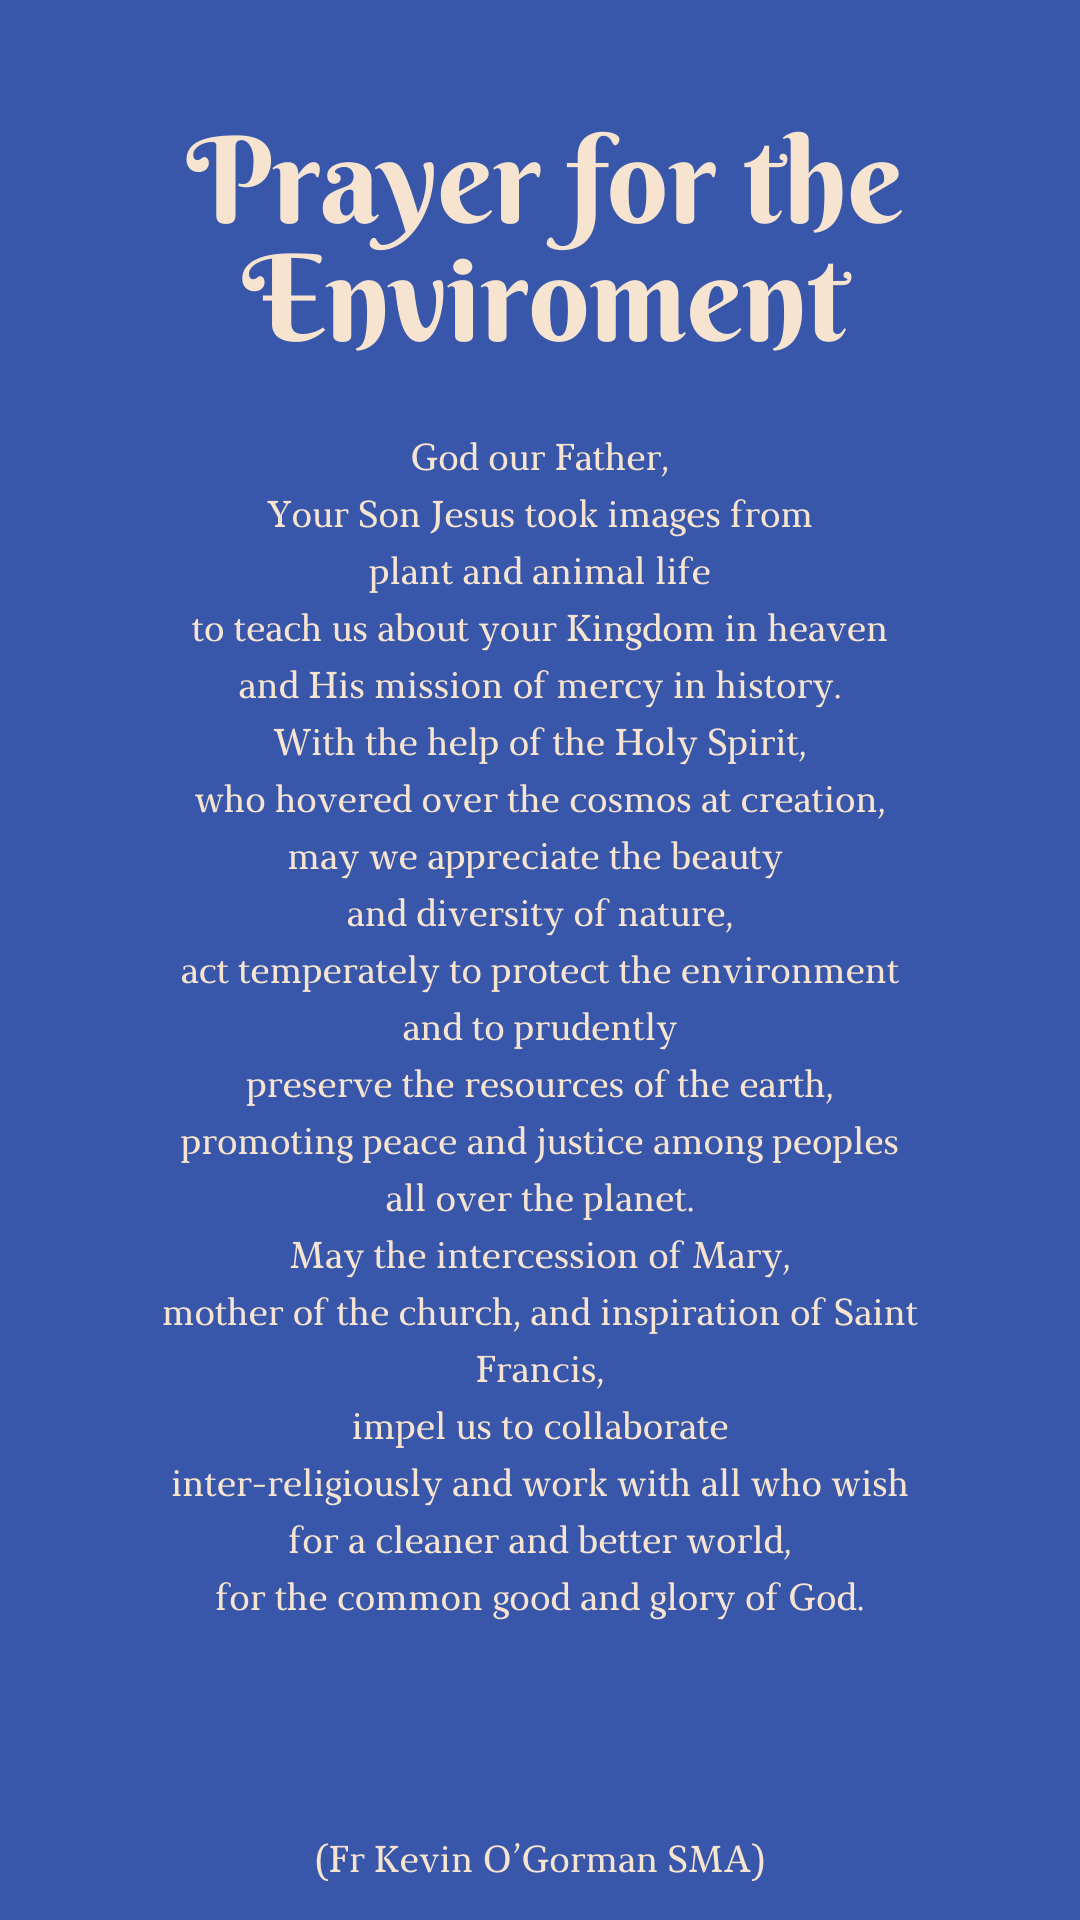 Fr-Kevin-O-Gorman-SMA-Prayer-for-the-Enviroment.png#asset:11339